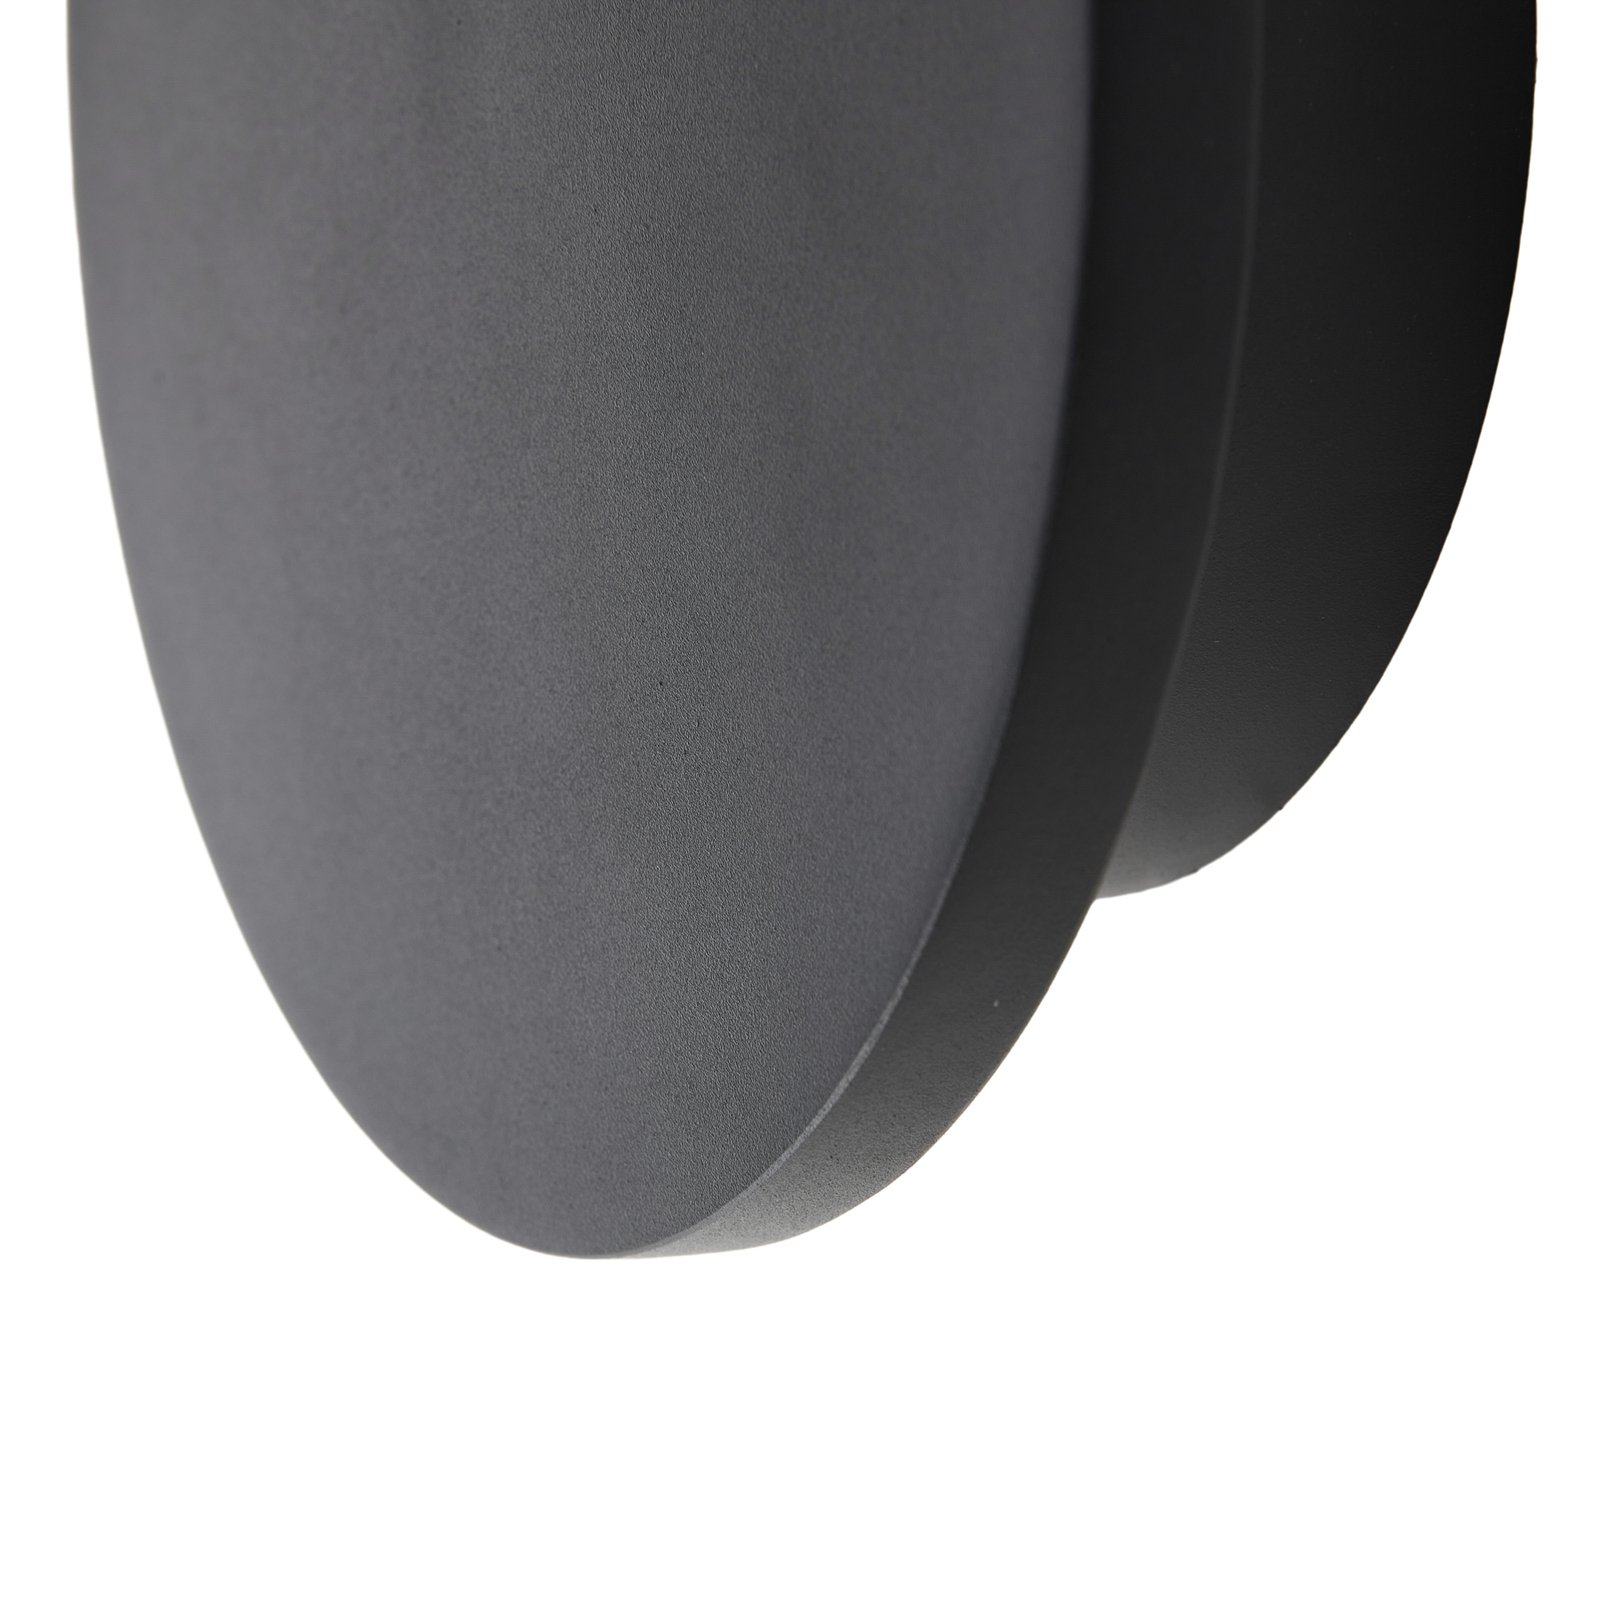 Lucande LED-Wandleuchte Elrik, schwarz, 20 cm hoch, Metall